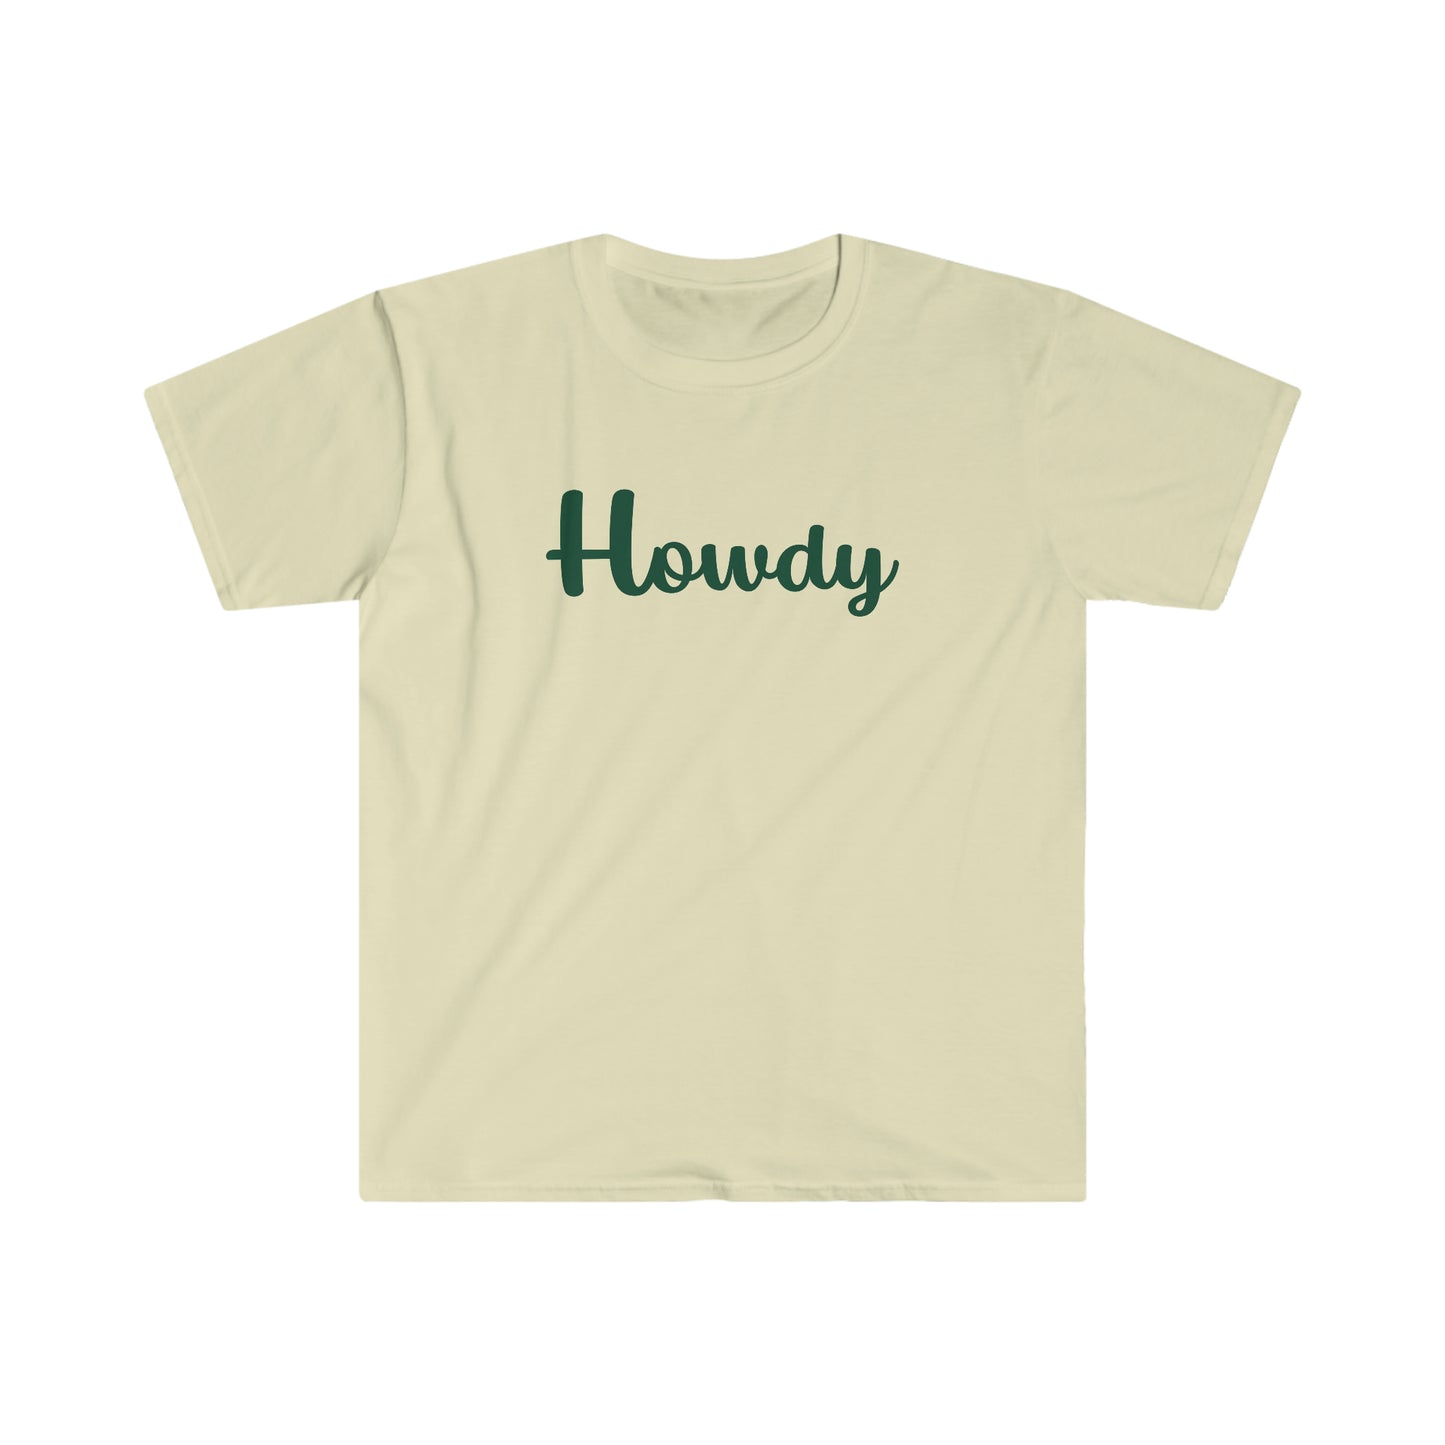 Howdy - Waco - T-Shirt